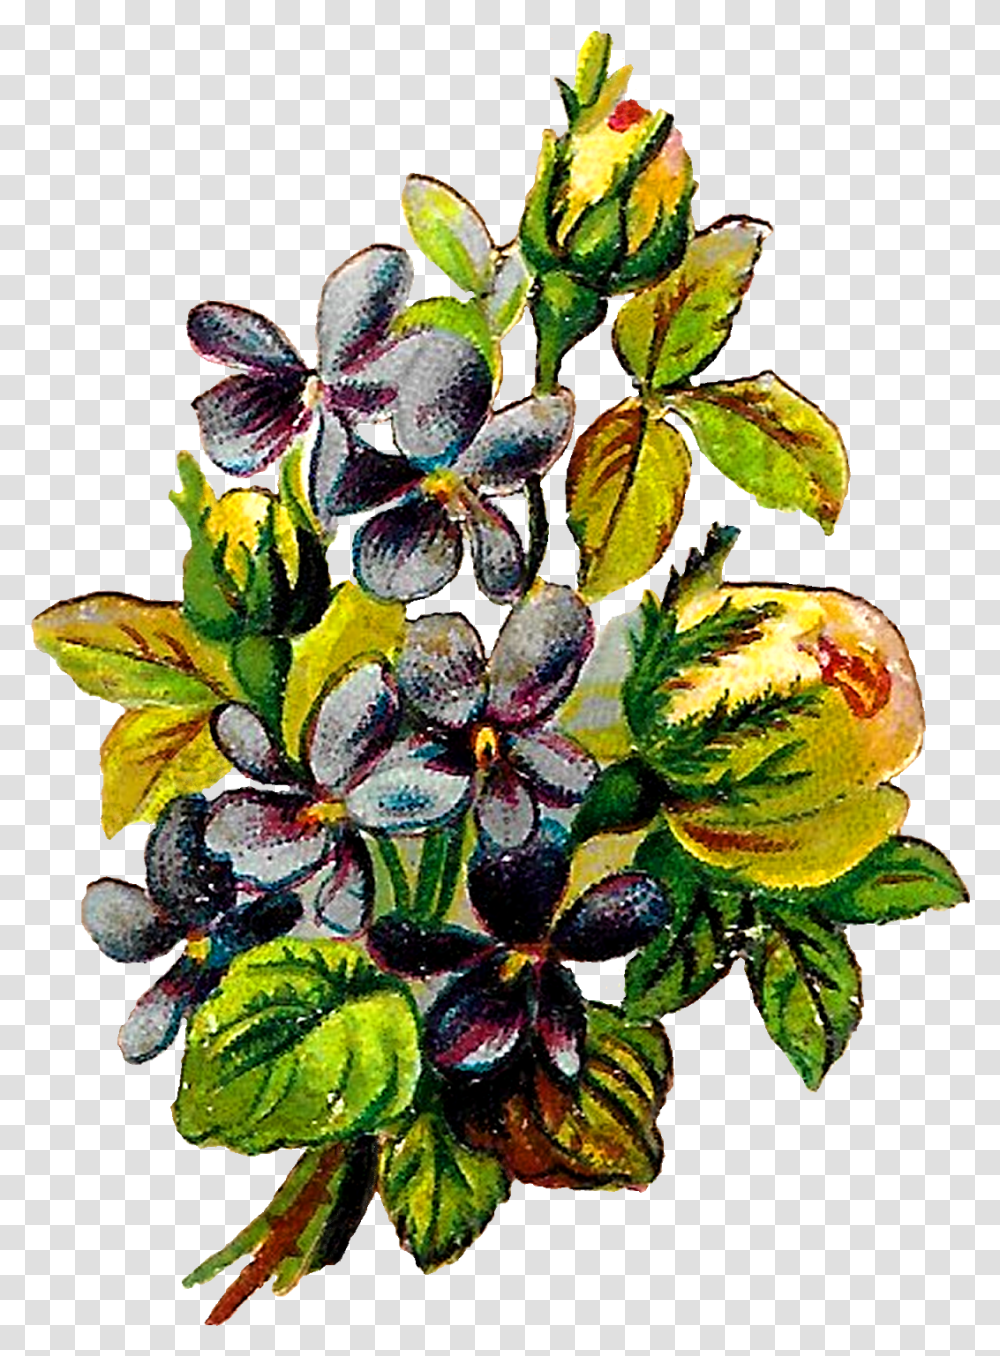 Antique Images Flower Ready To Use Rose Violets Bud, Plant, Fruit, Food, Blueberry Transparent Png